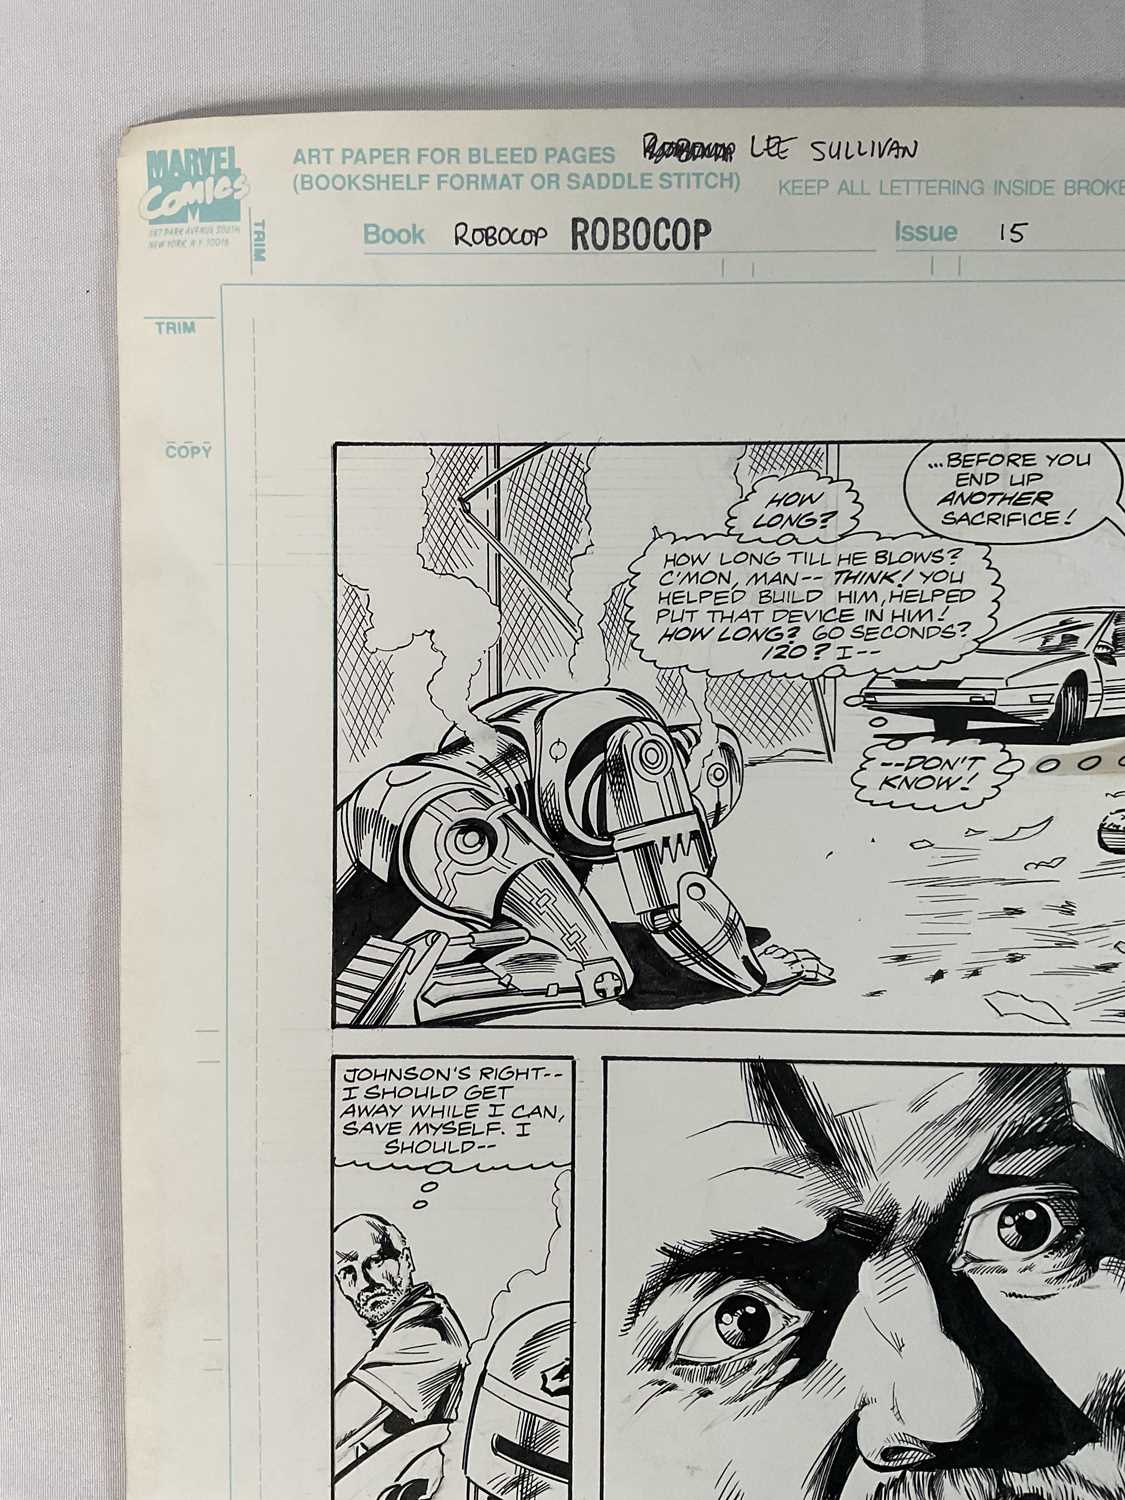 Original Comic Book Artwork by LEE SULLIVAN from ROBOCOP #15 (1991, Marvel Comics) page 3, - Image 2 of 2